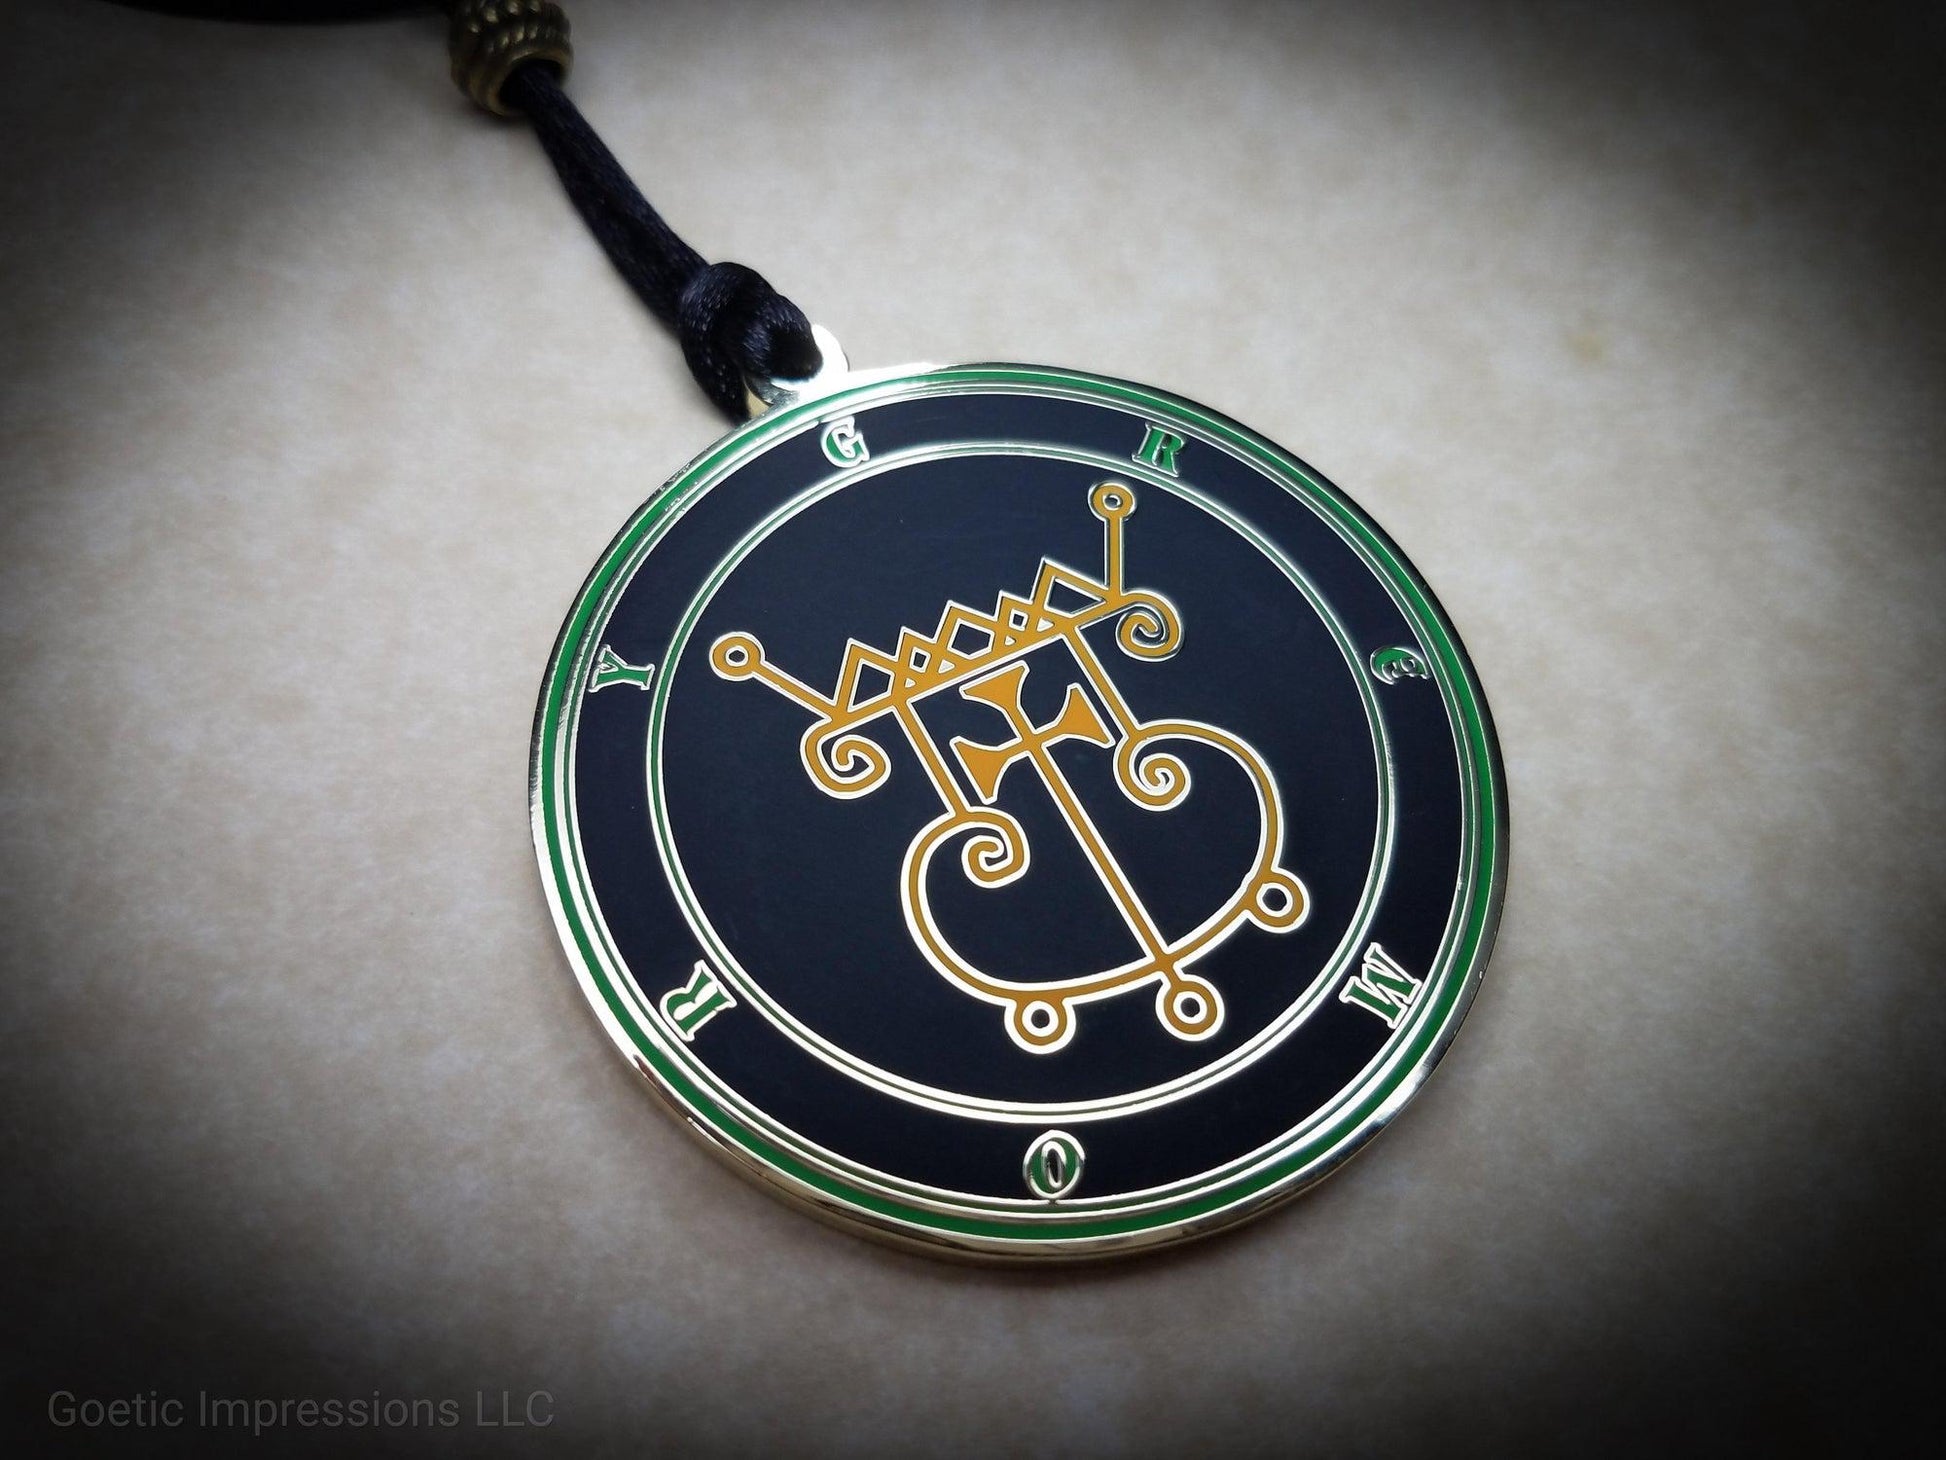 Tetragrammaton Ceremonial Magic Seal of Solomon Ring Brass Jewelry